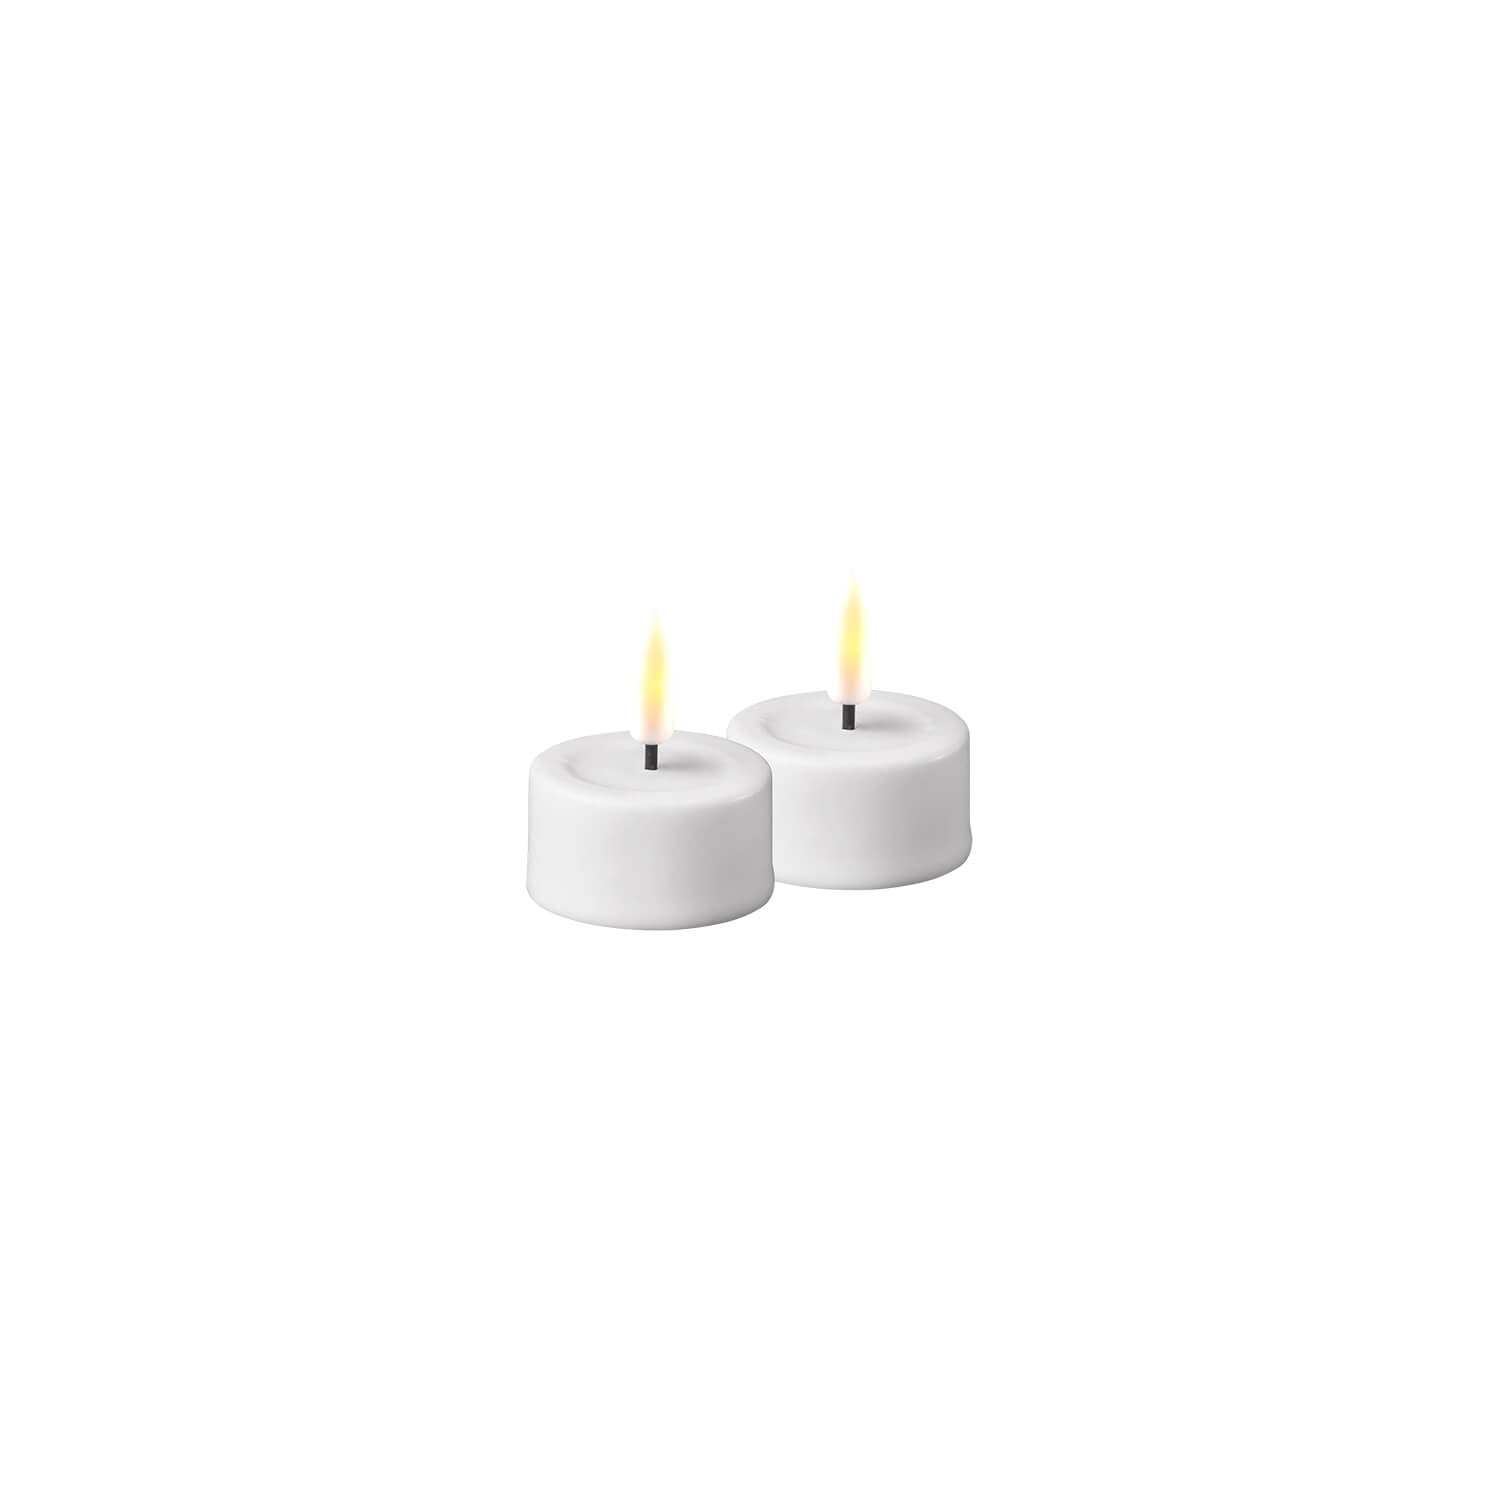 votive candle clipart black and white sun